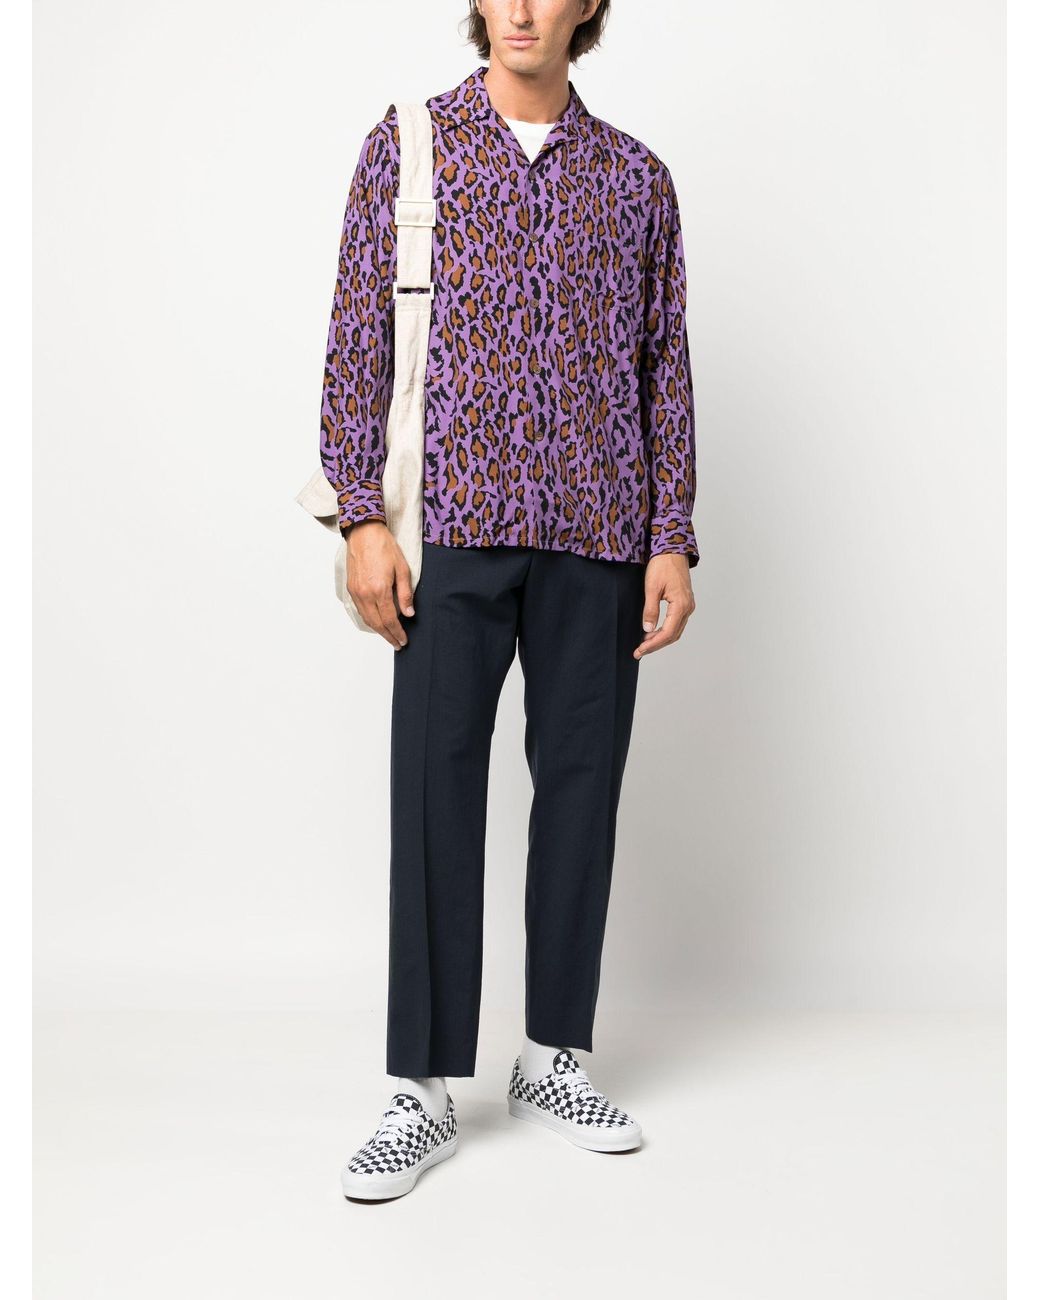 Wacko Maria Purple Leopard Print Shirt - Men's - Rayon for Men